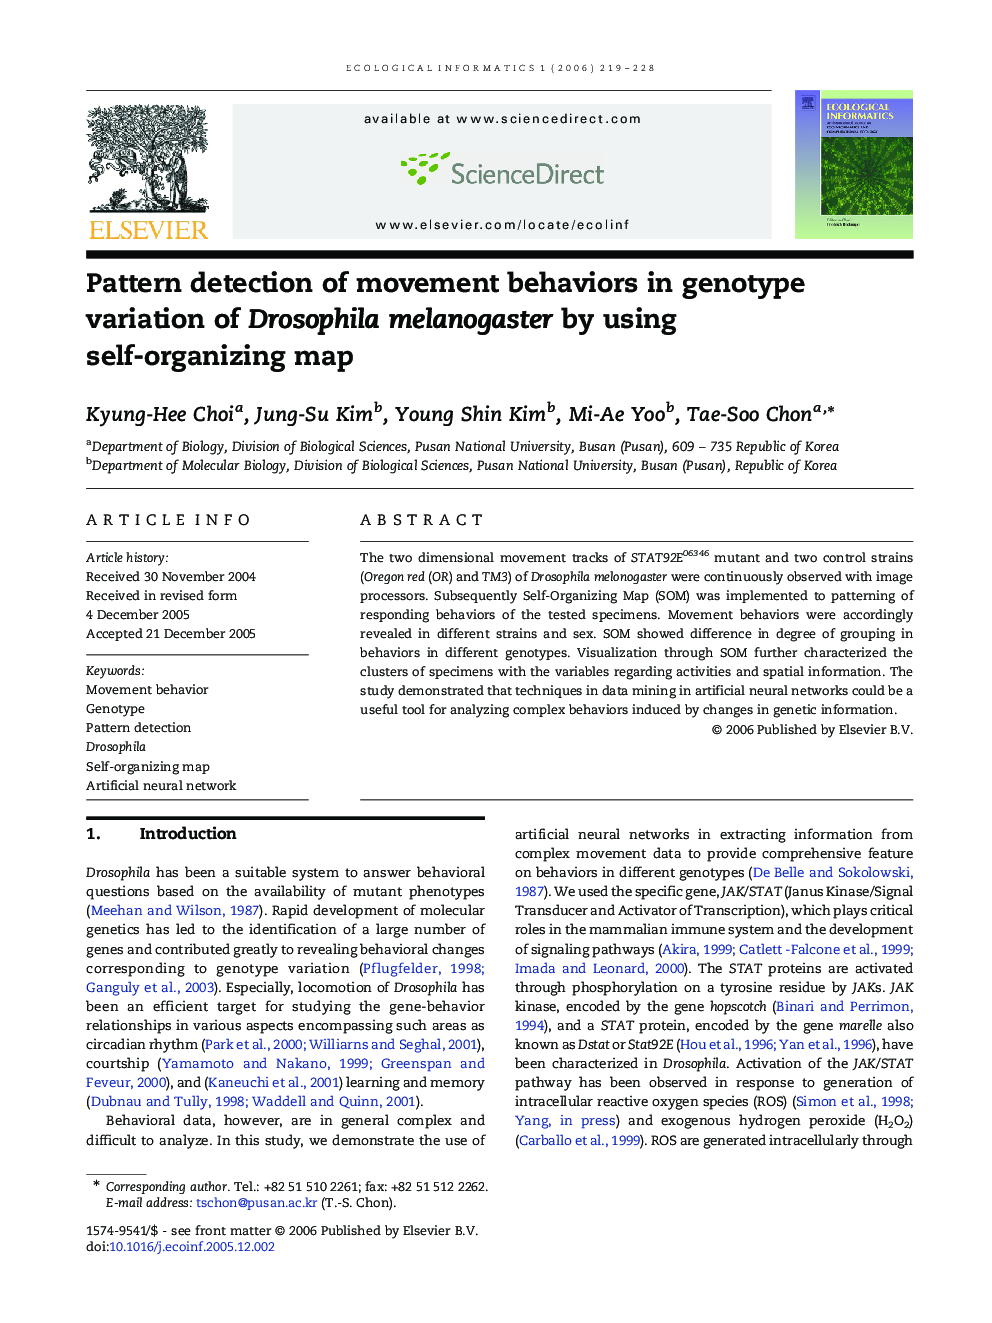 Pattern detection of movement behaviors in genotype variation of Drosophila melanogaster by using self-organizing map